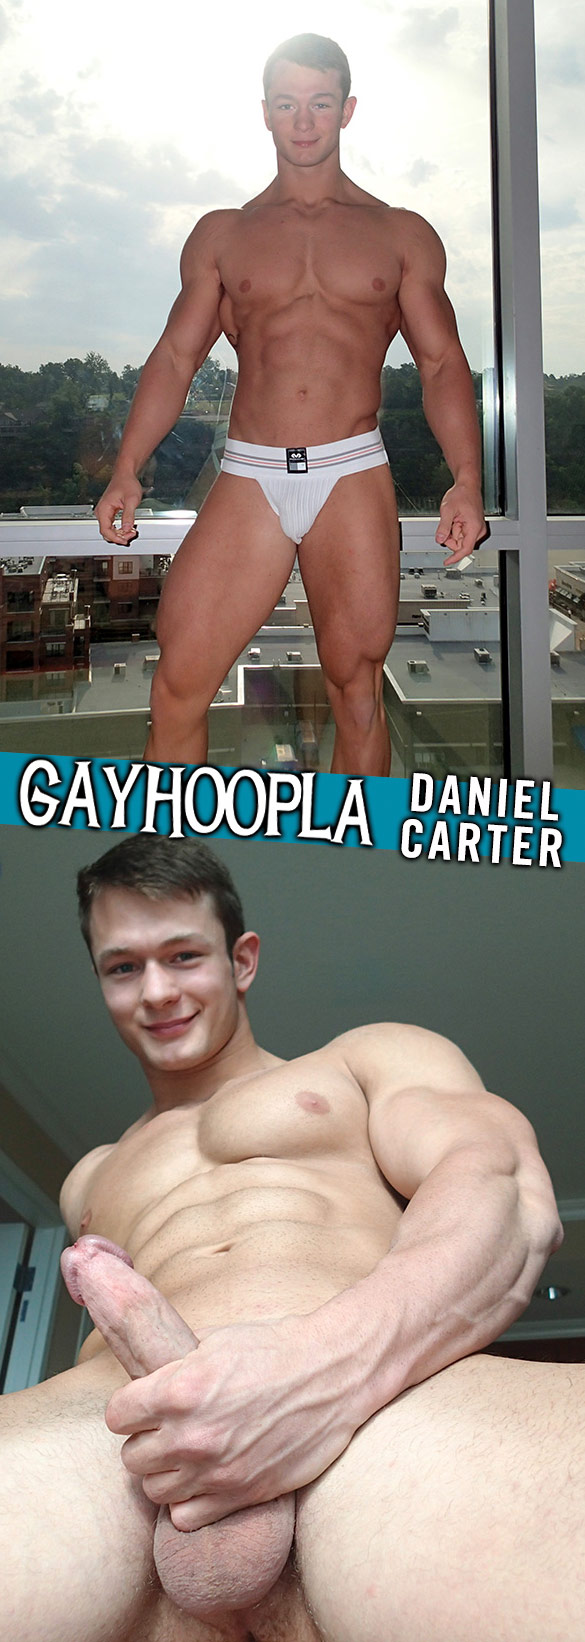 GayHoopla: Muscle jock Daniel Carter rubs one out